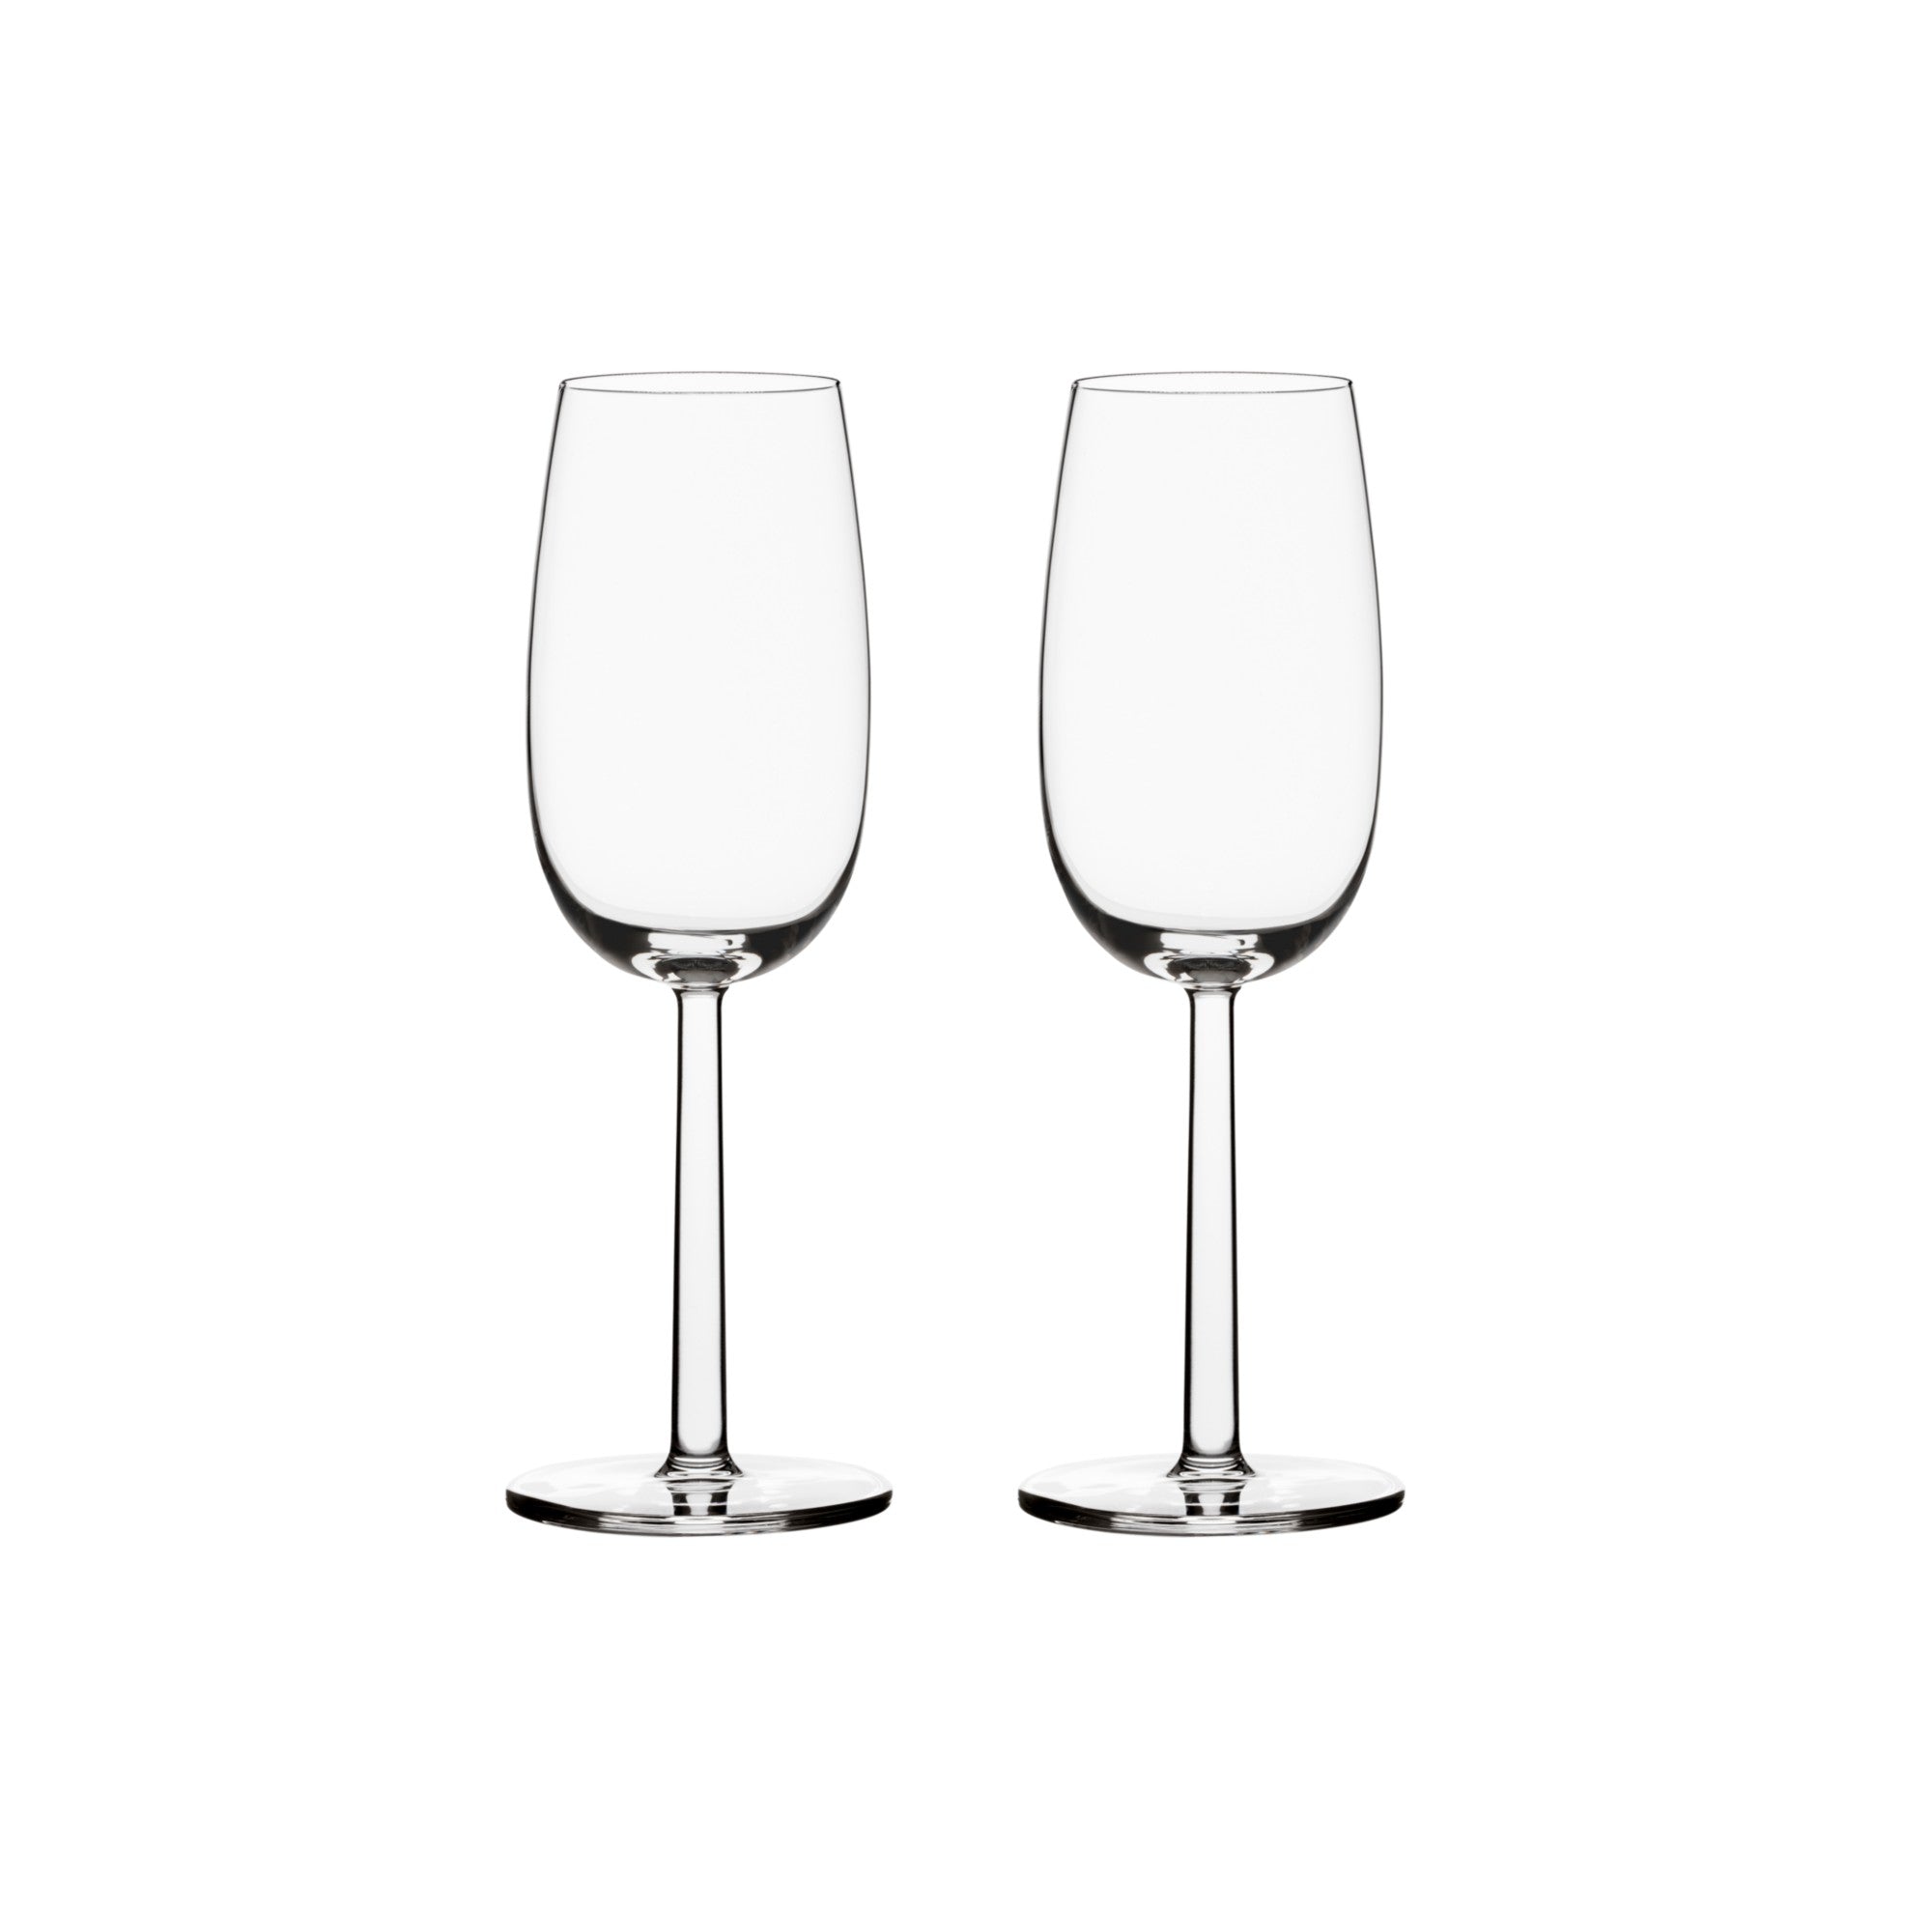 Raami Sparkling wine glass set